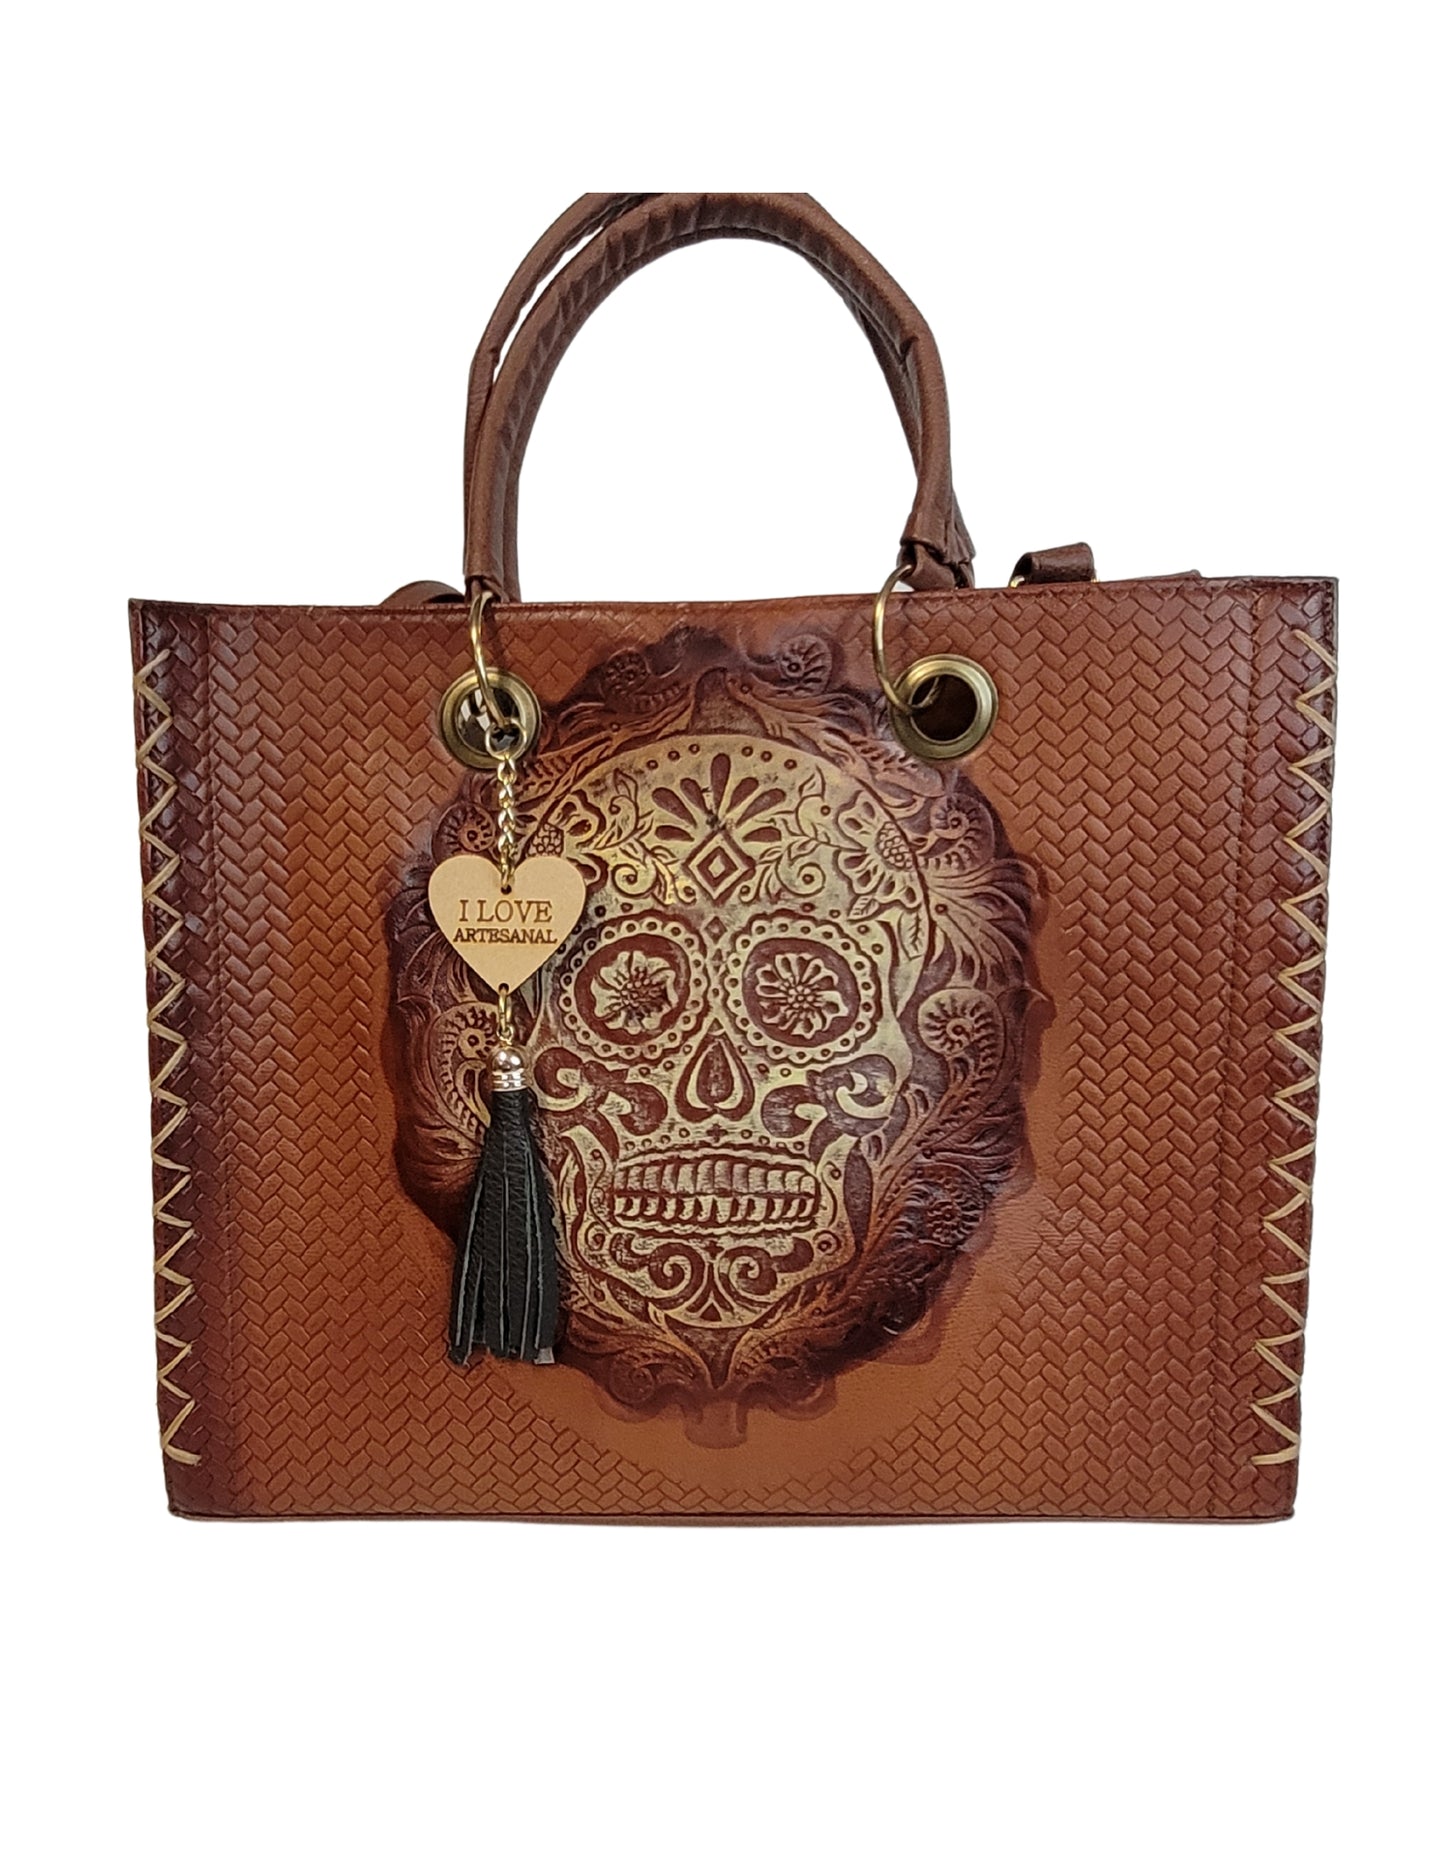 Handmade leather purse from Oaxaca Mexico artesanal